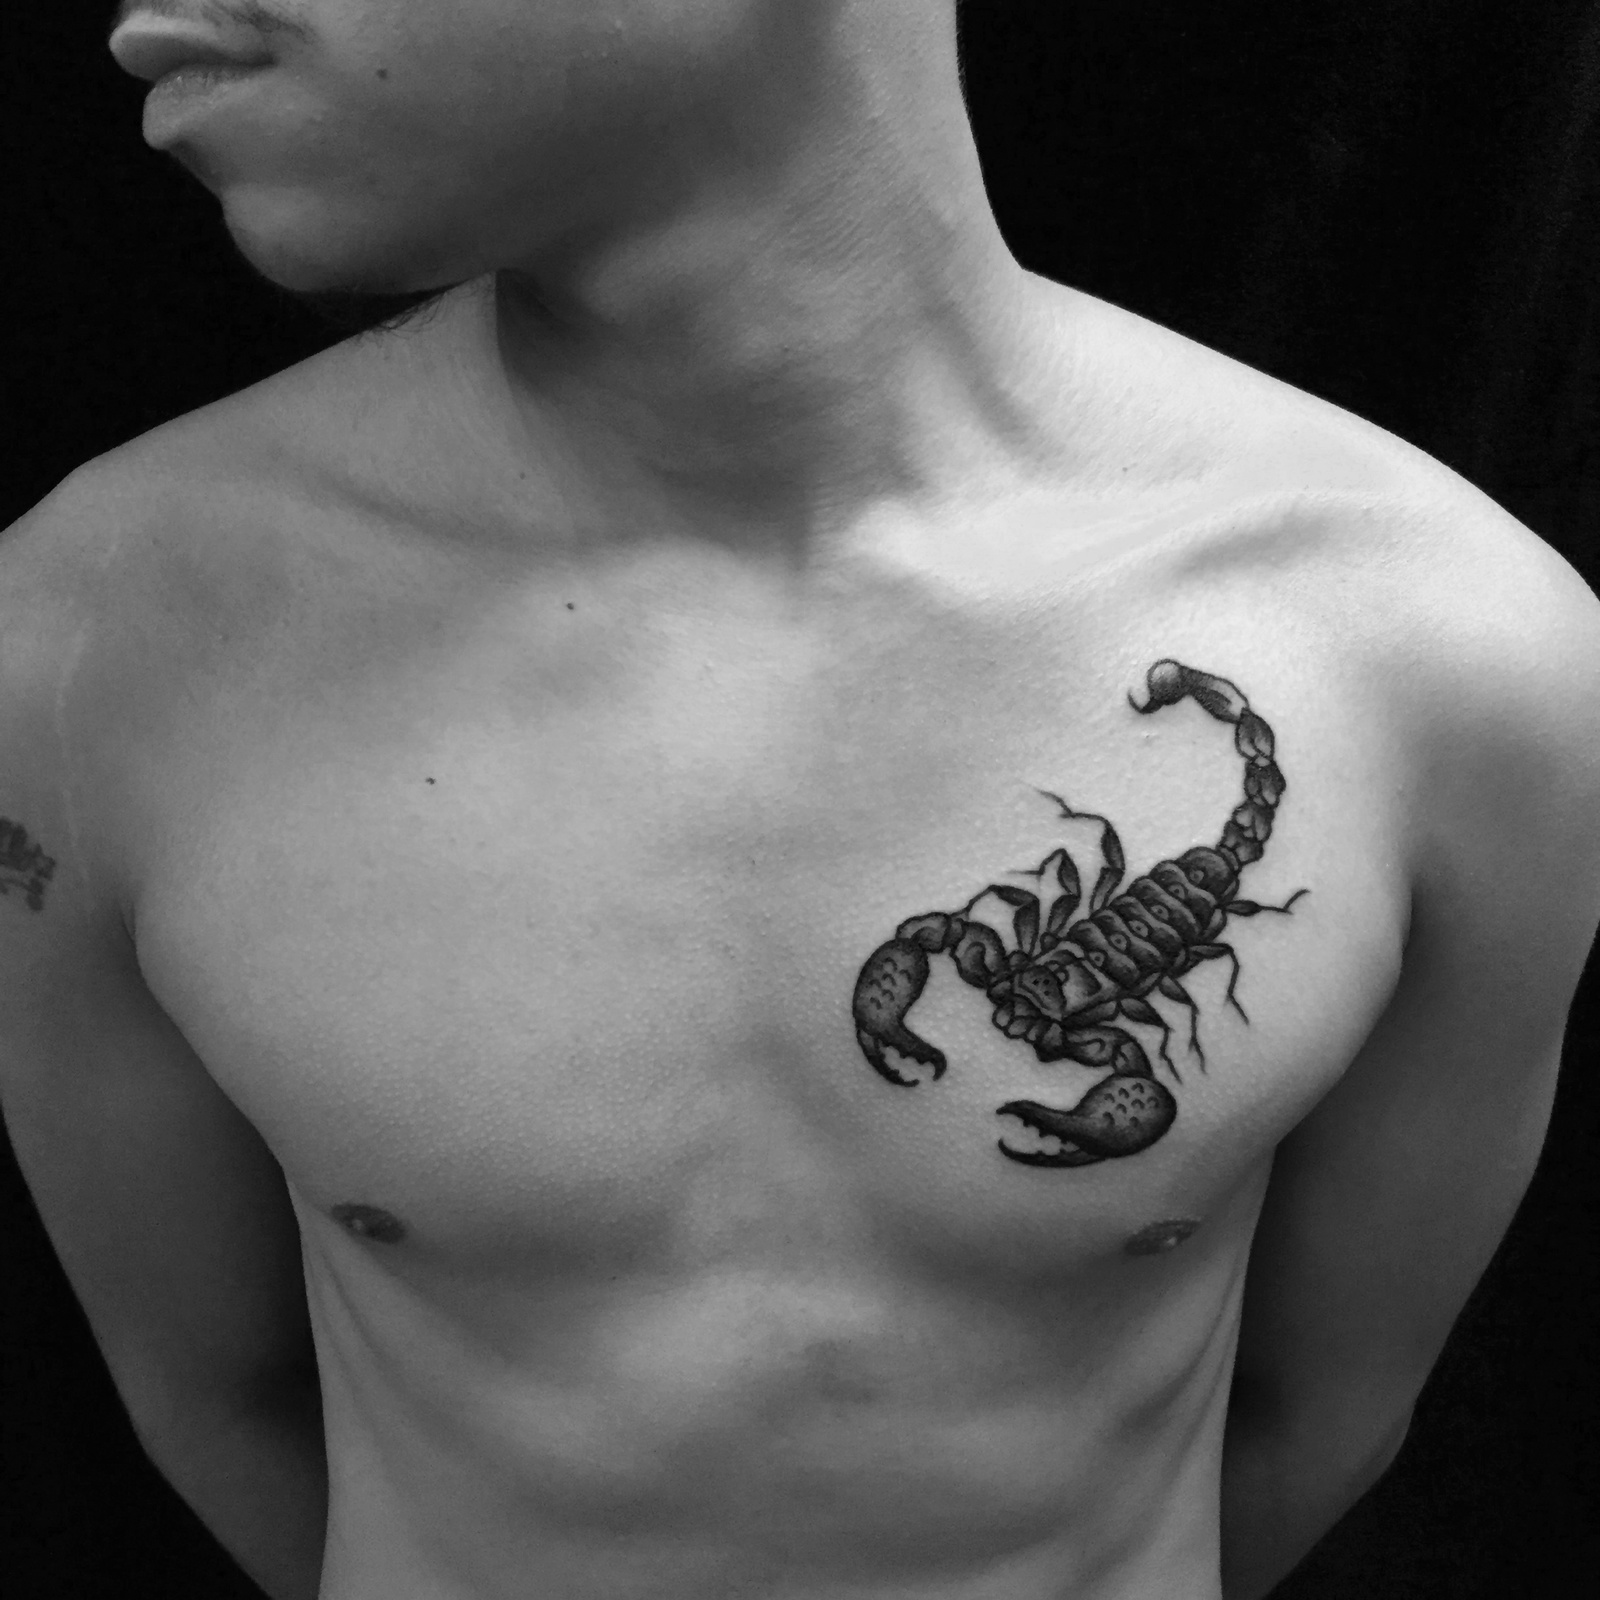 что означает скорпион на груди у мужчины (120) фото